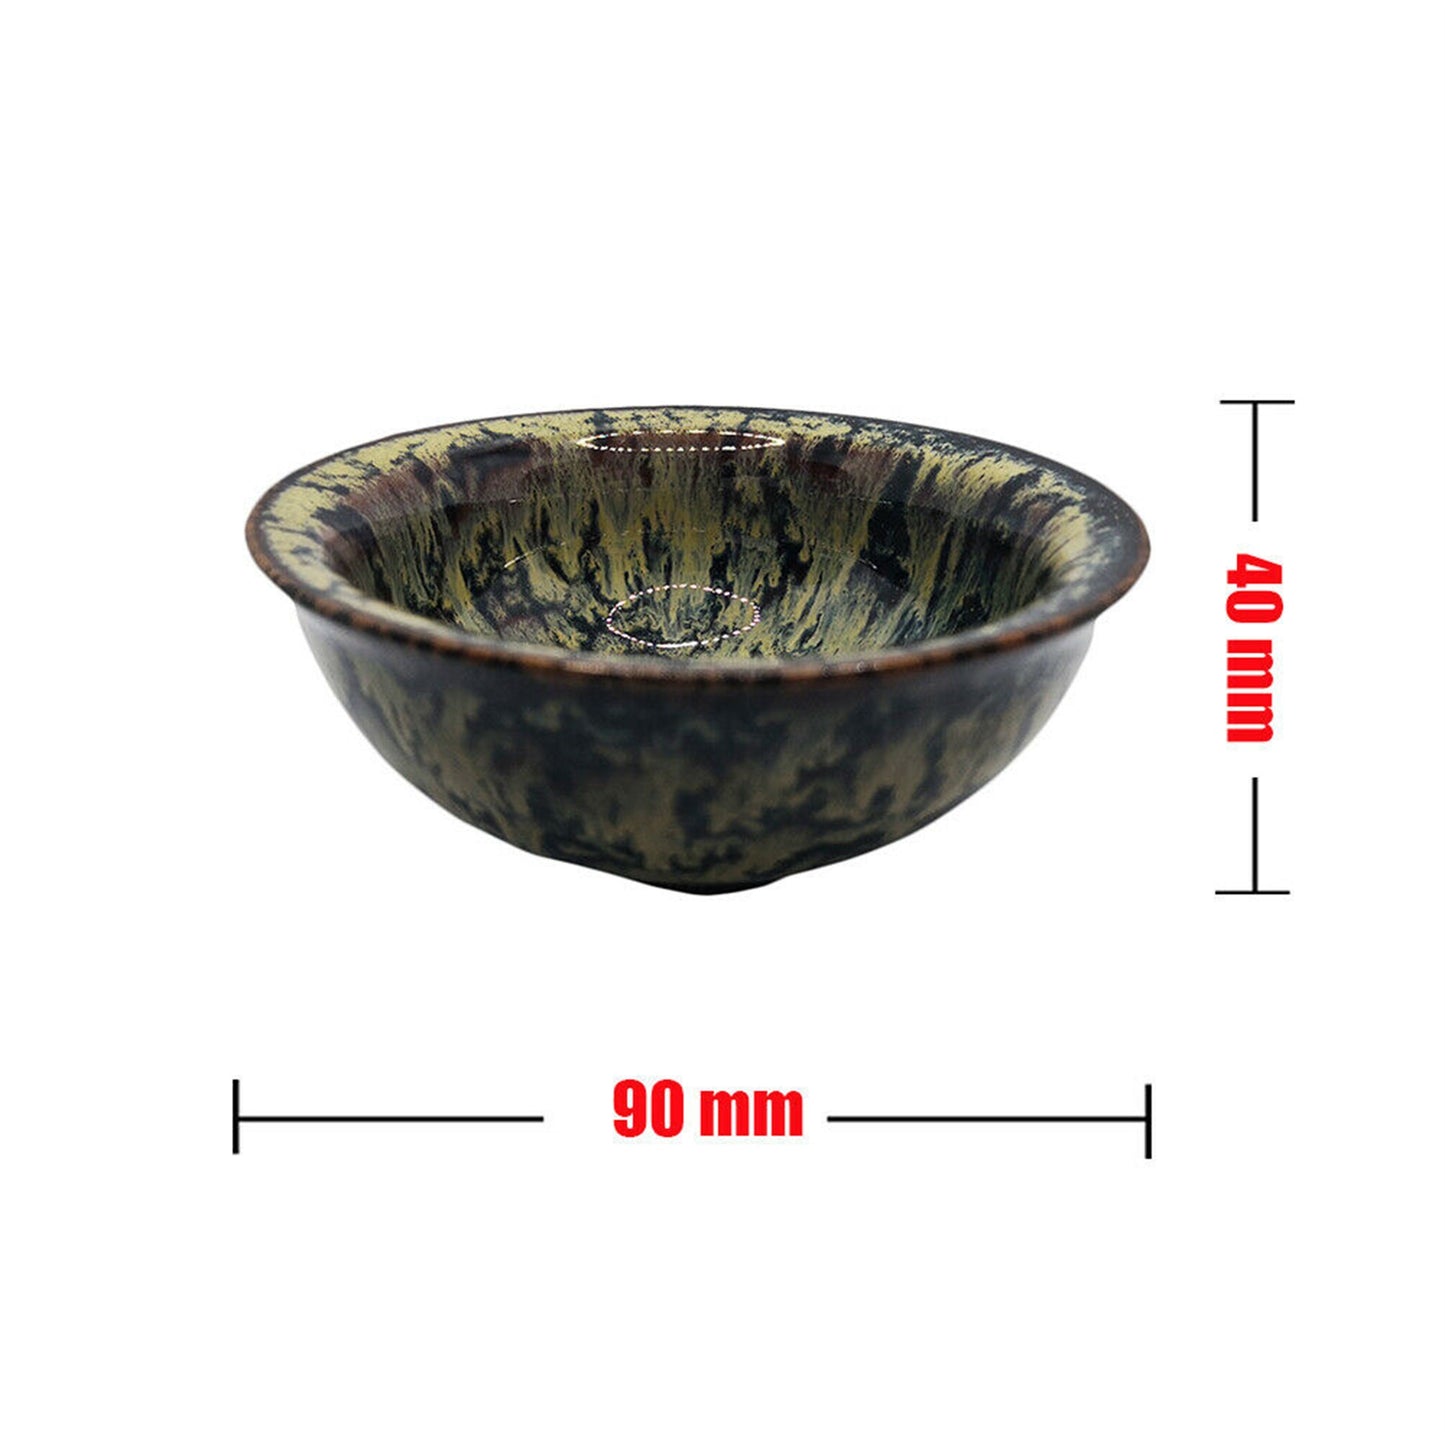 022-Chinese JianZhan Handcrafted Tenmoku Tea Cup Ceramic Teacup Mug Crafts Japanese Tea Cup Collection